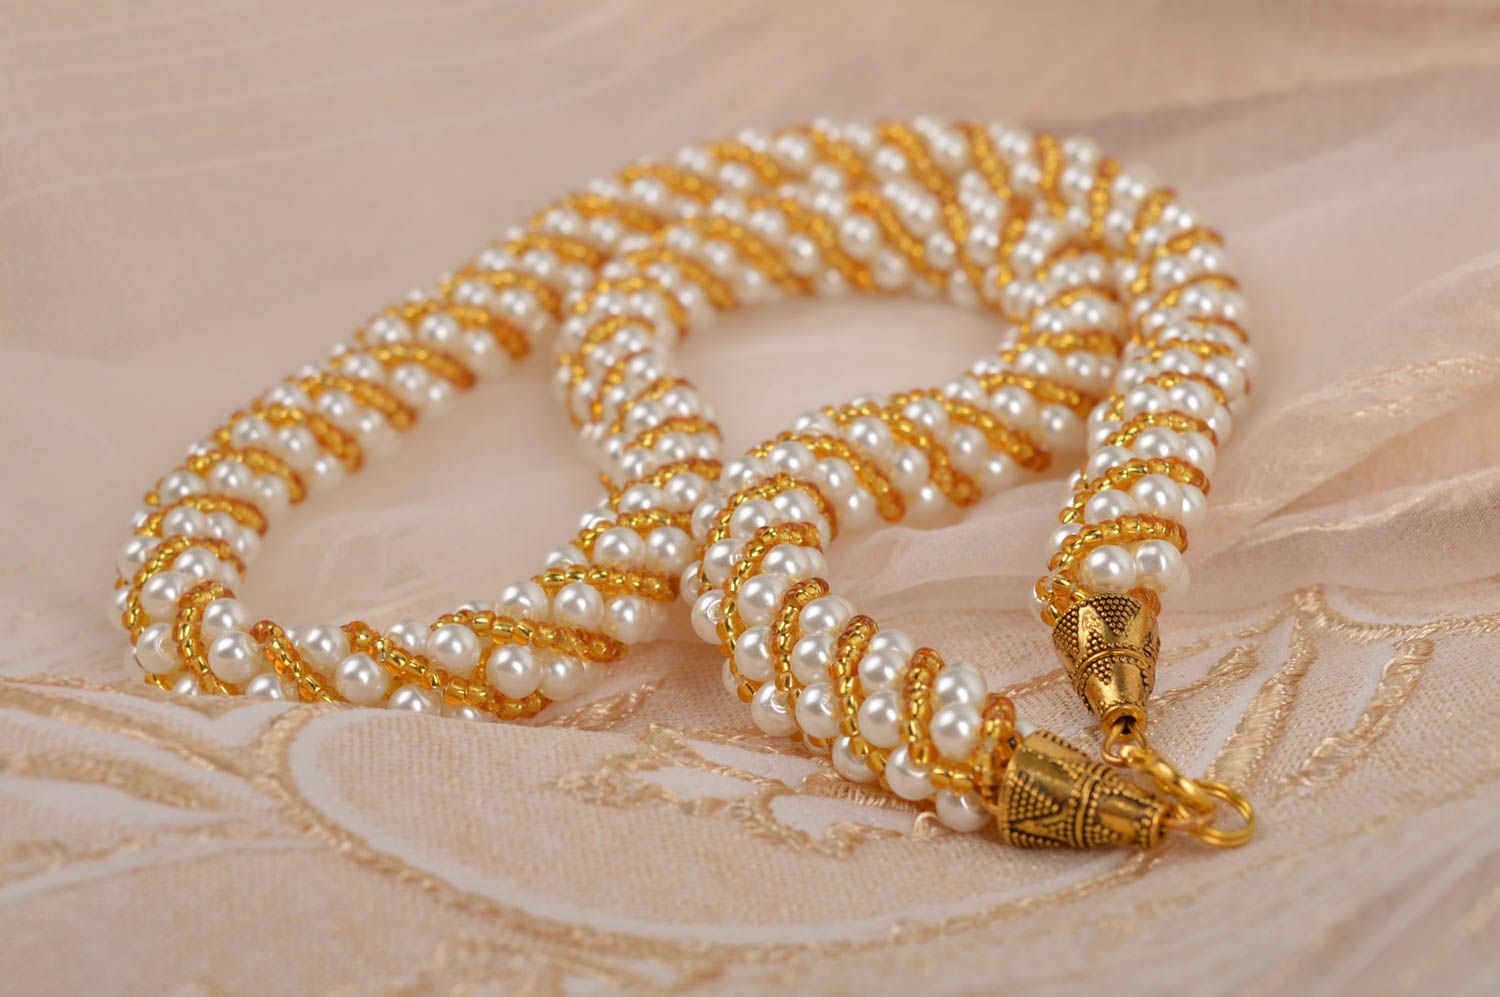 Handmade necklace designer accessory beaded jewelry unusual necklace gift ideas photo 1